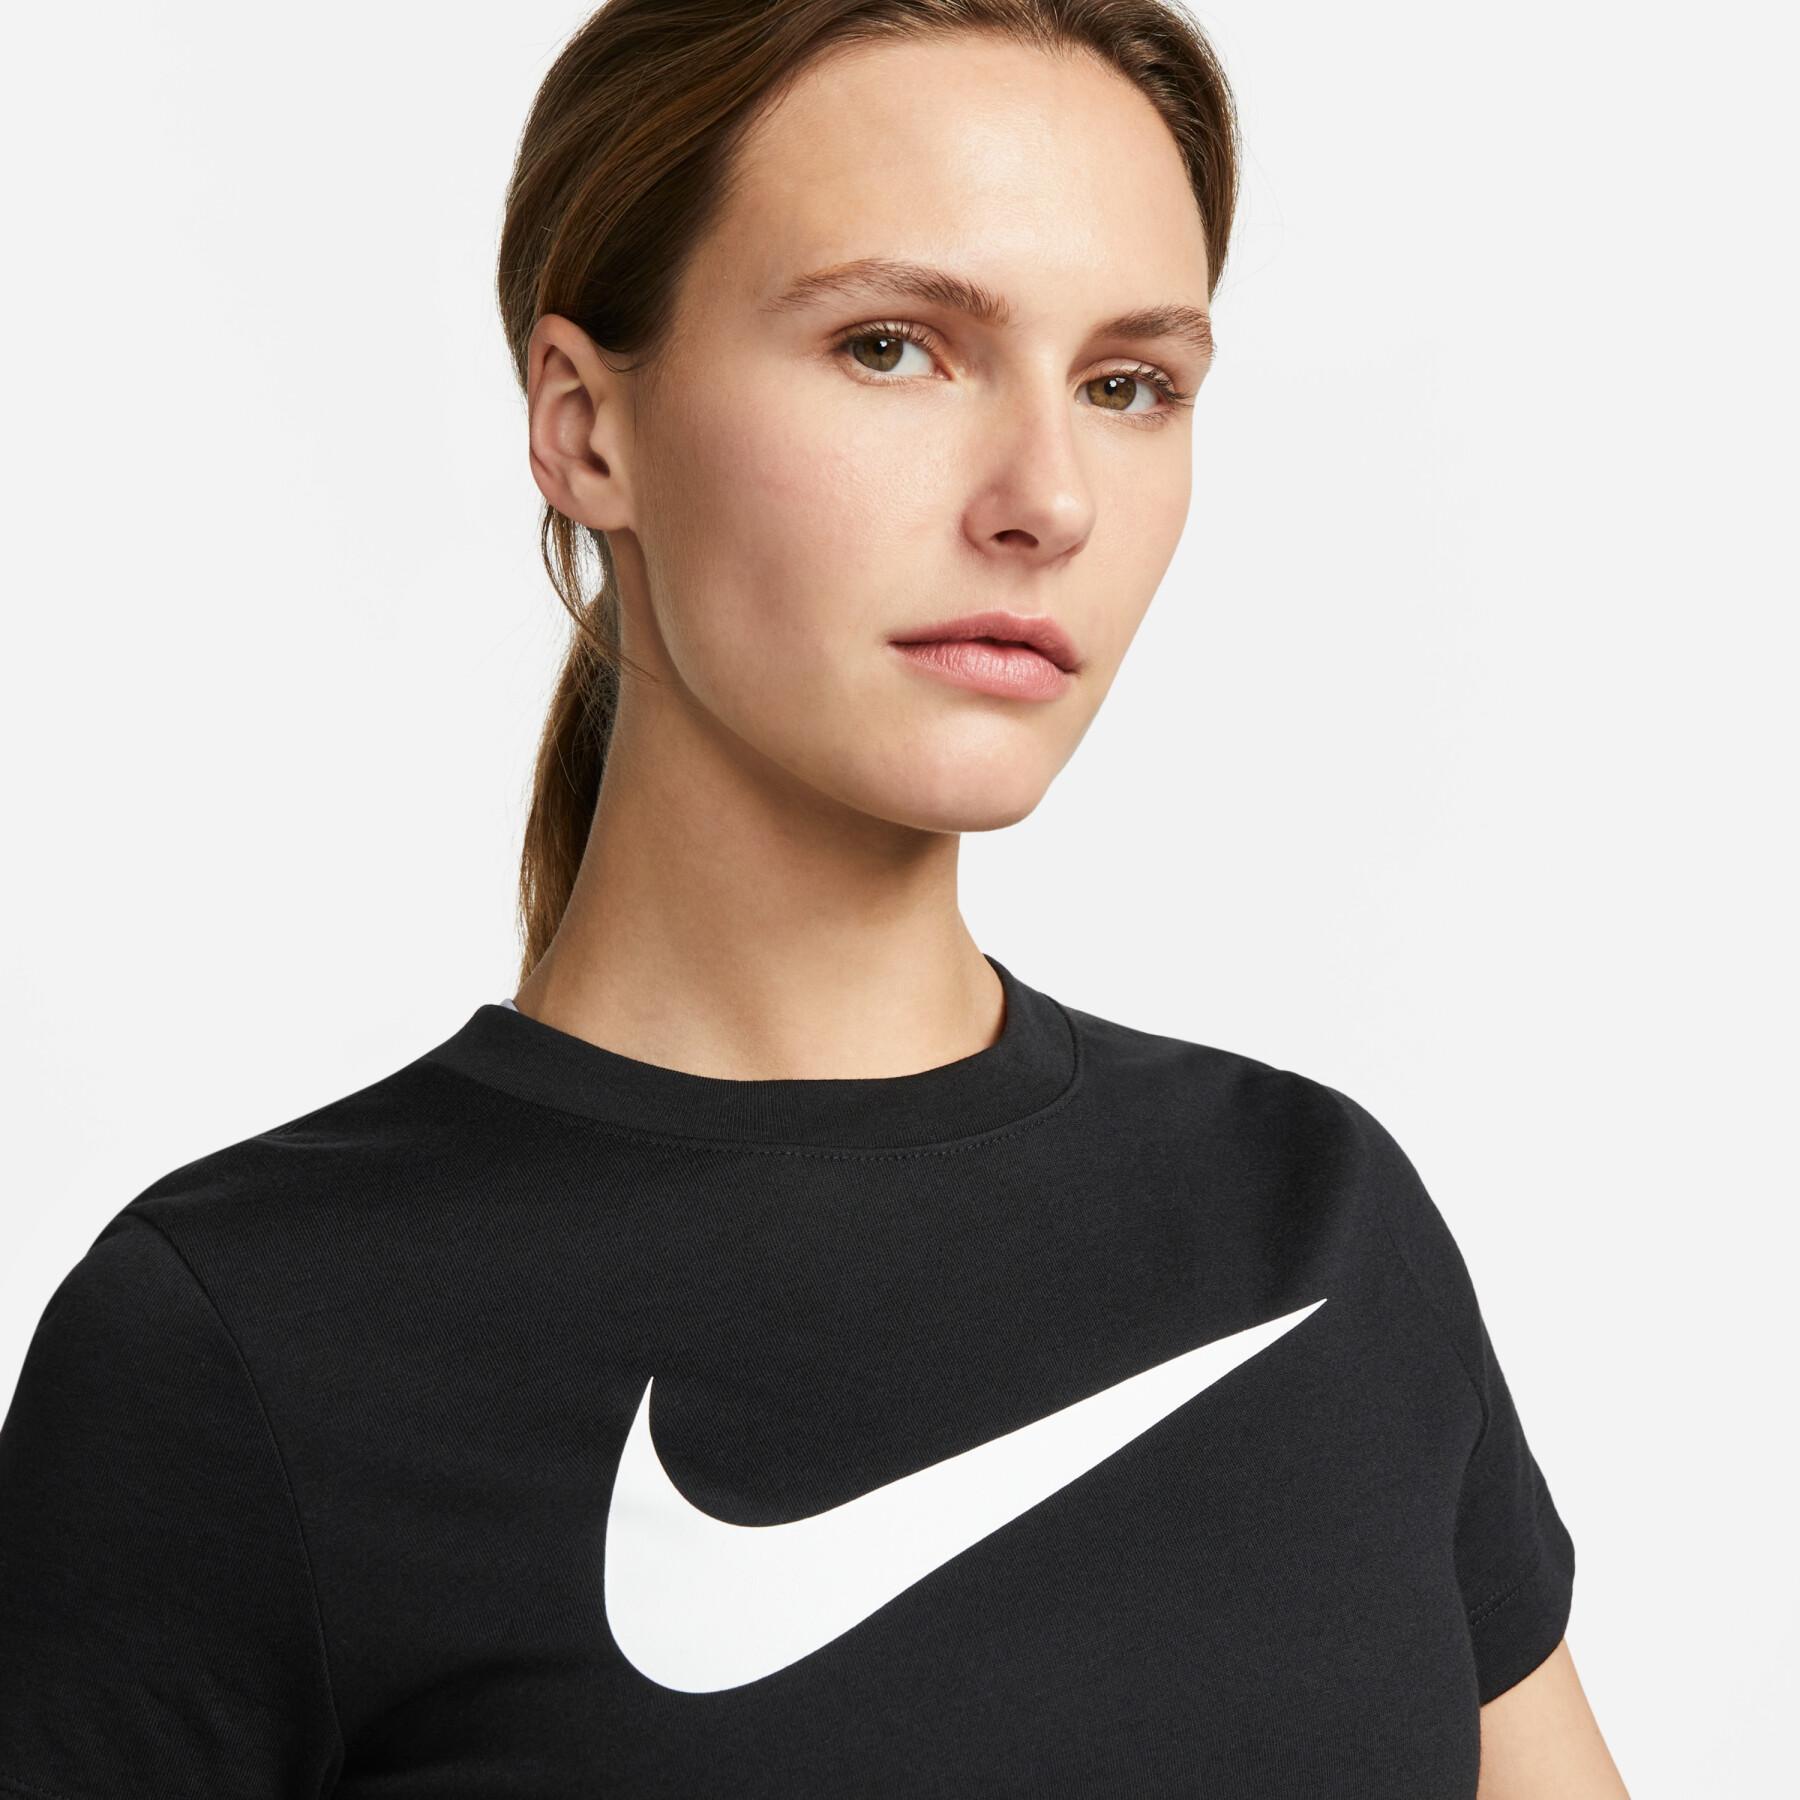 Damen-T-Shirt Nike Fit Park20